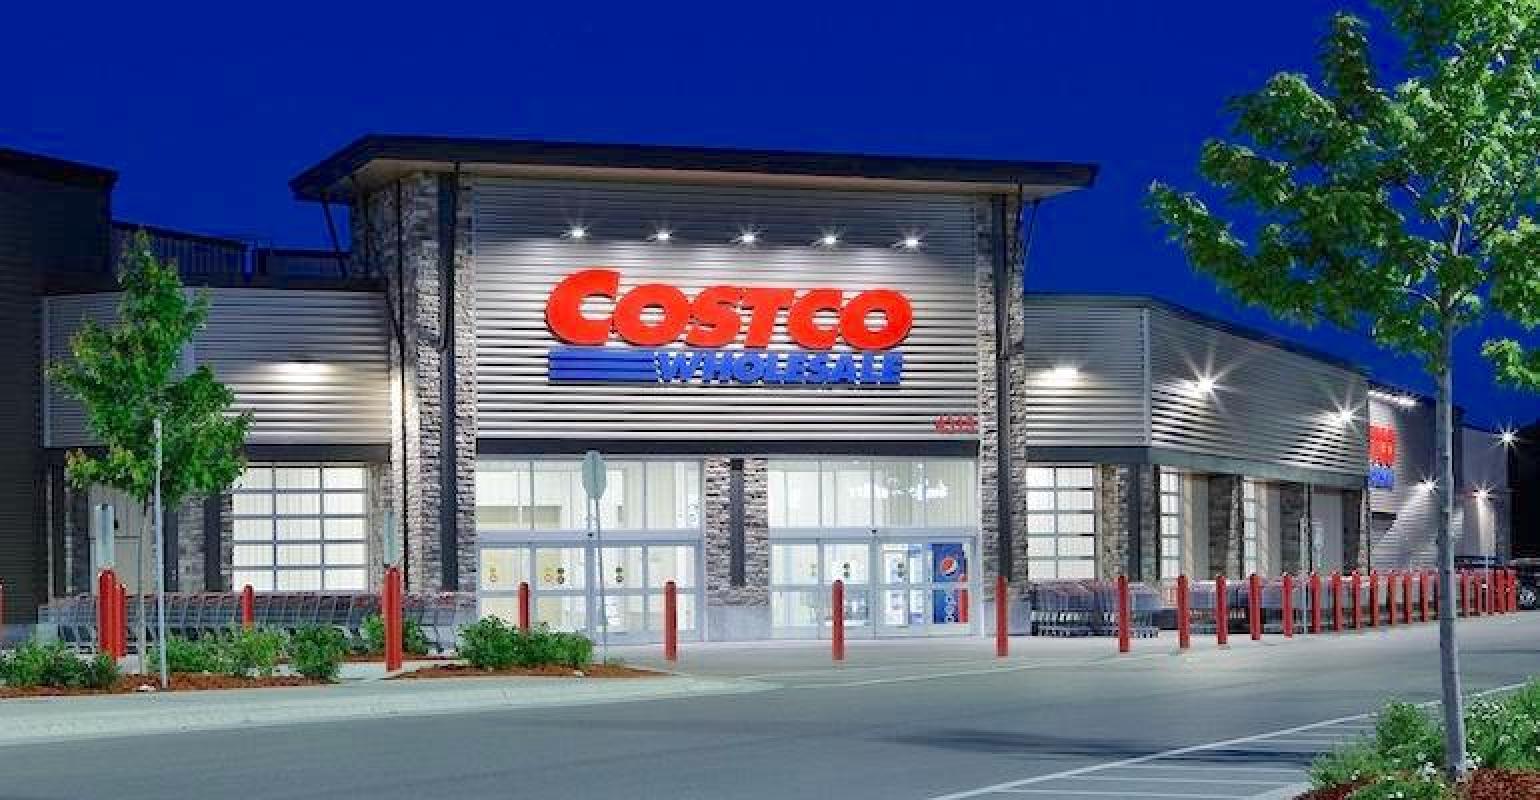 🇨🇦 Let's Explore Costco CANADA Store in Vancouver [4K video] 